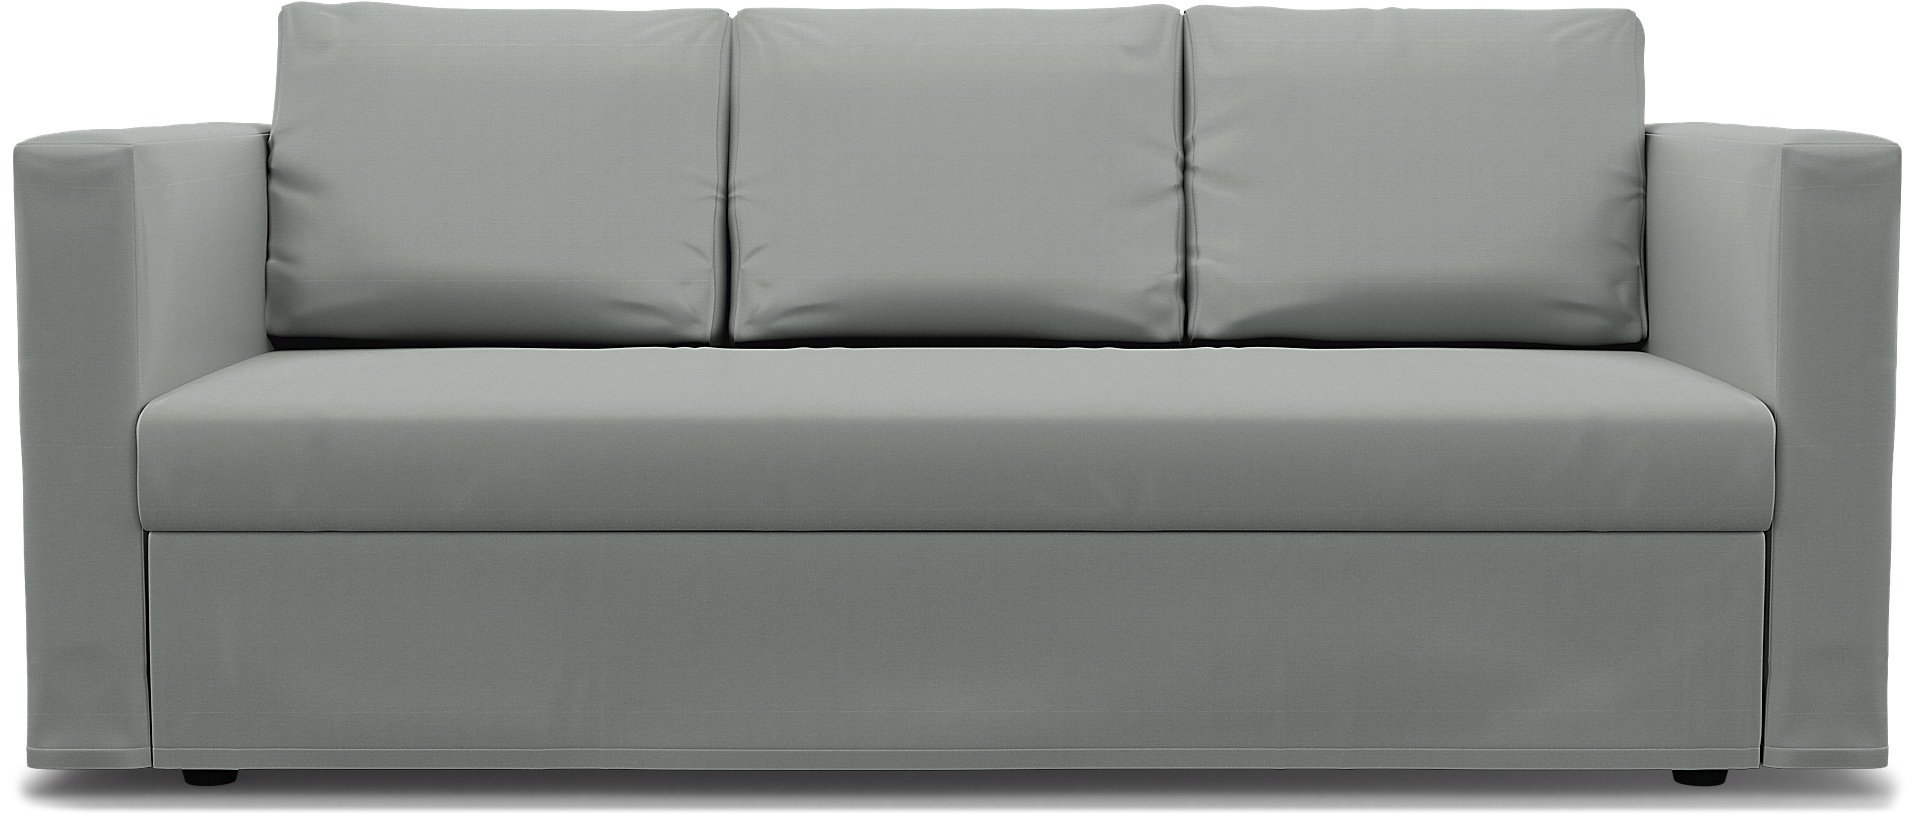 IKEA - Friheten 3 Seater Sofa Bed Cover, Drizzle, Cotton - Bemz